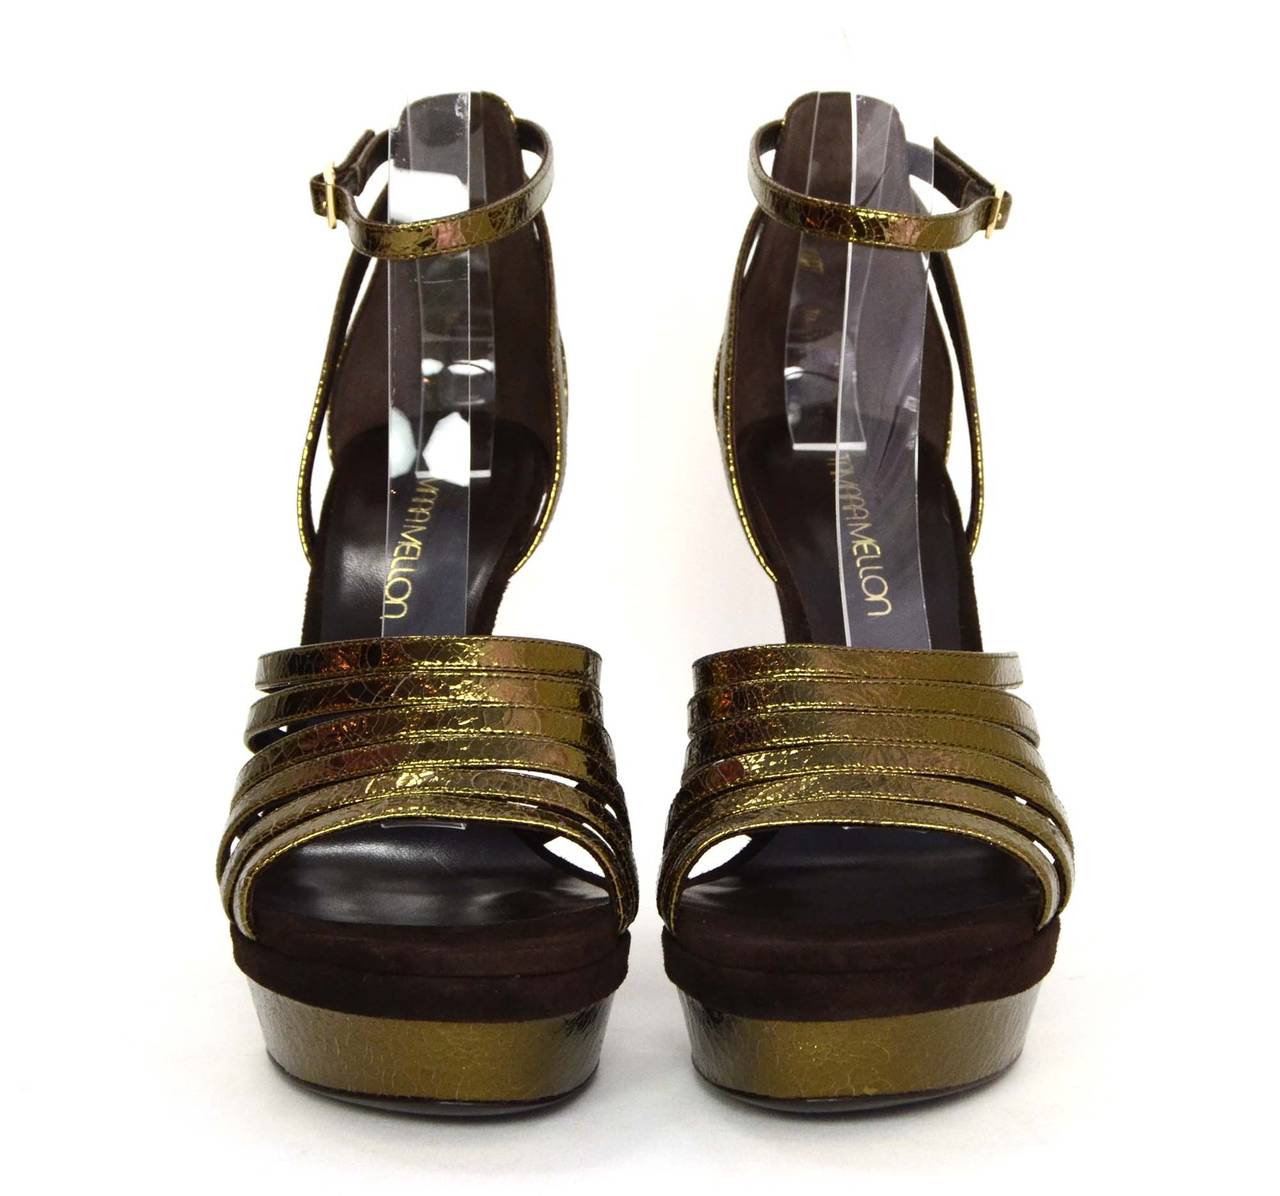 Black TAMARA MELLON Supreme 105 Metallic Platform Sandals sz 39.5 rt. $895